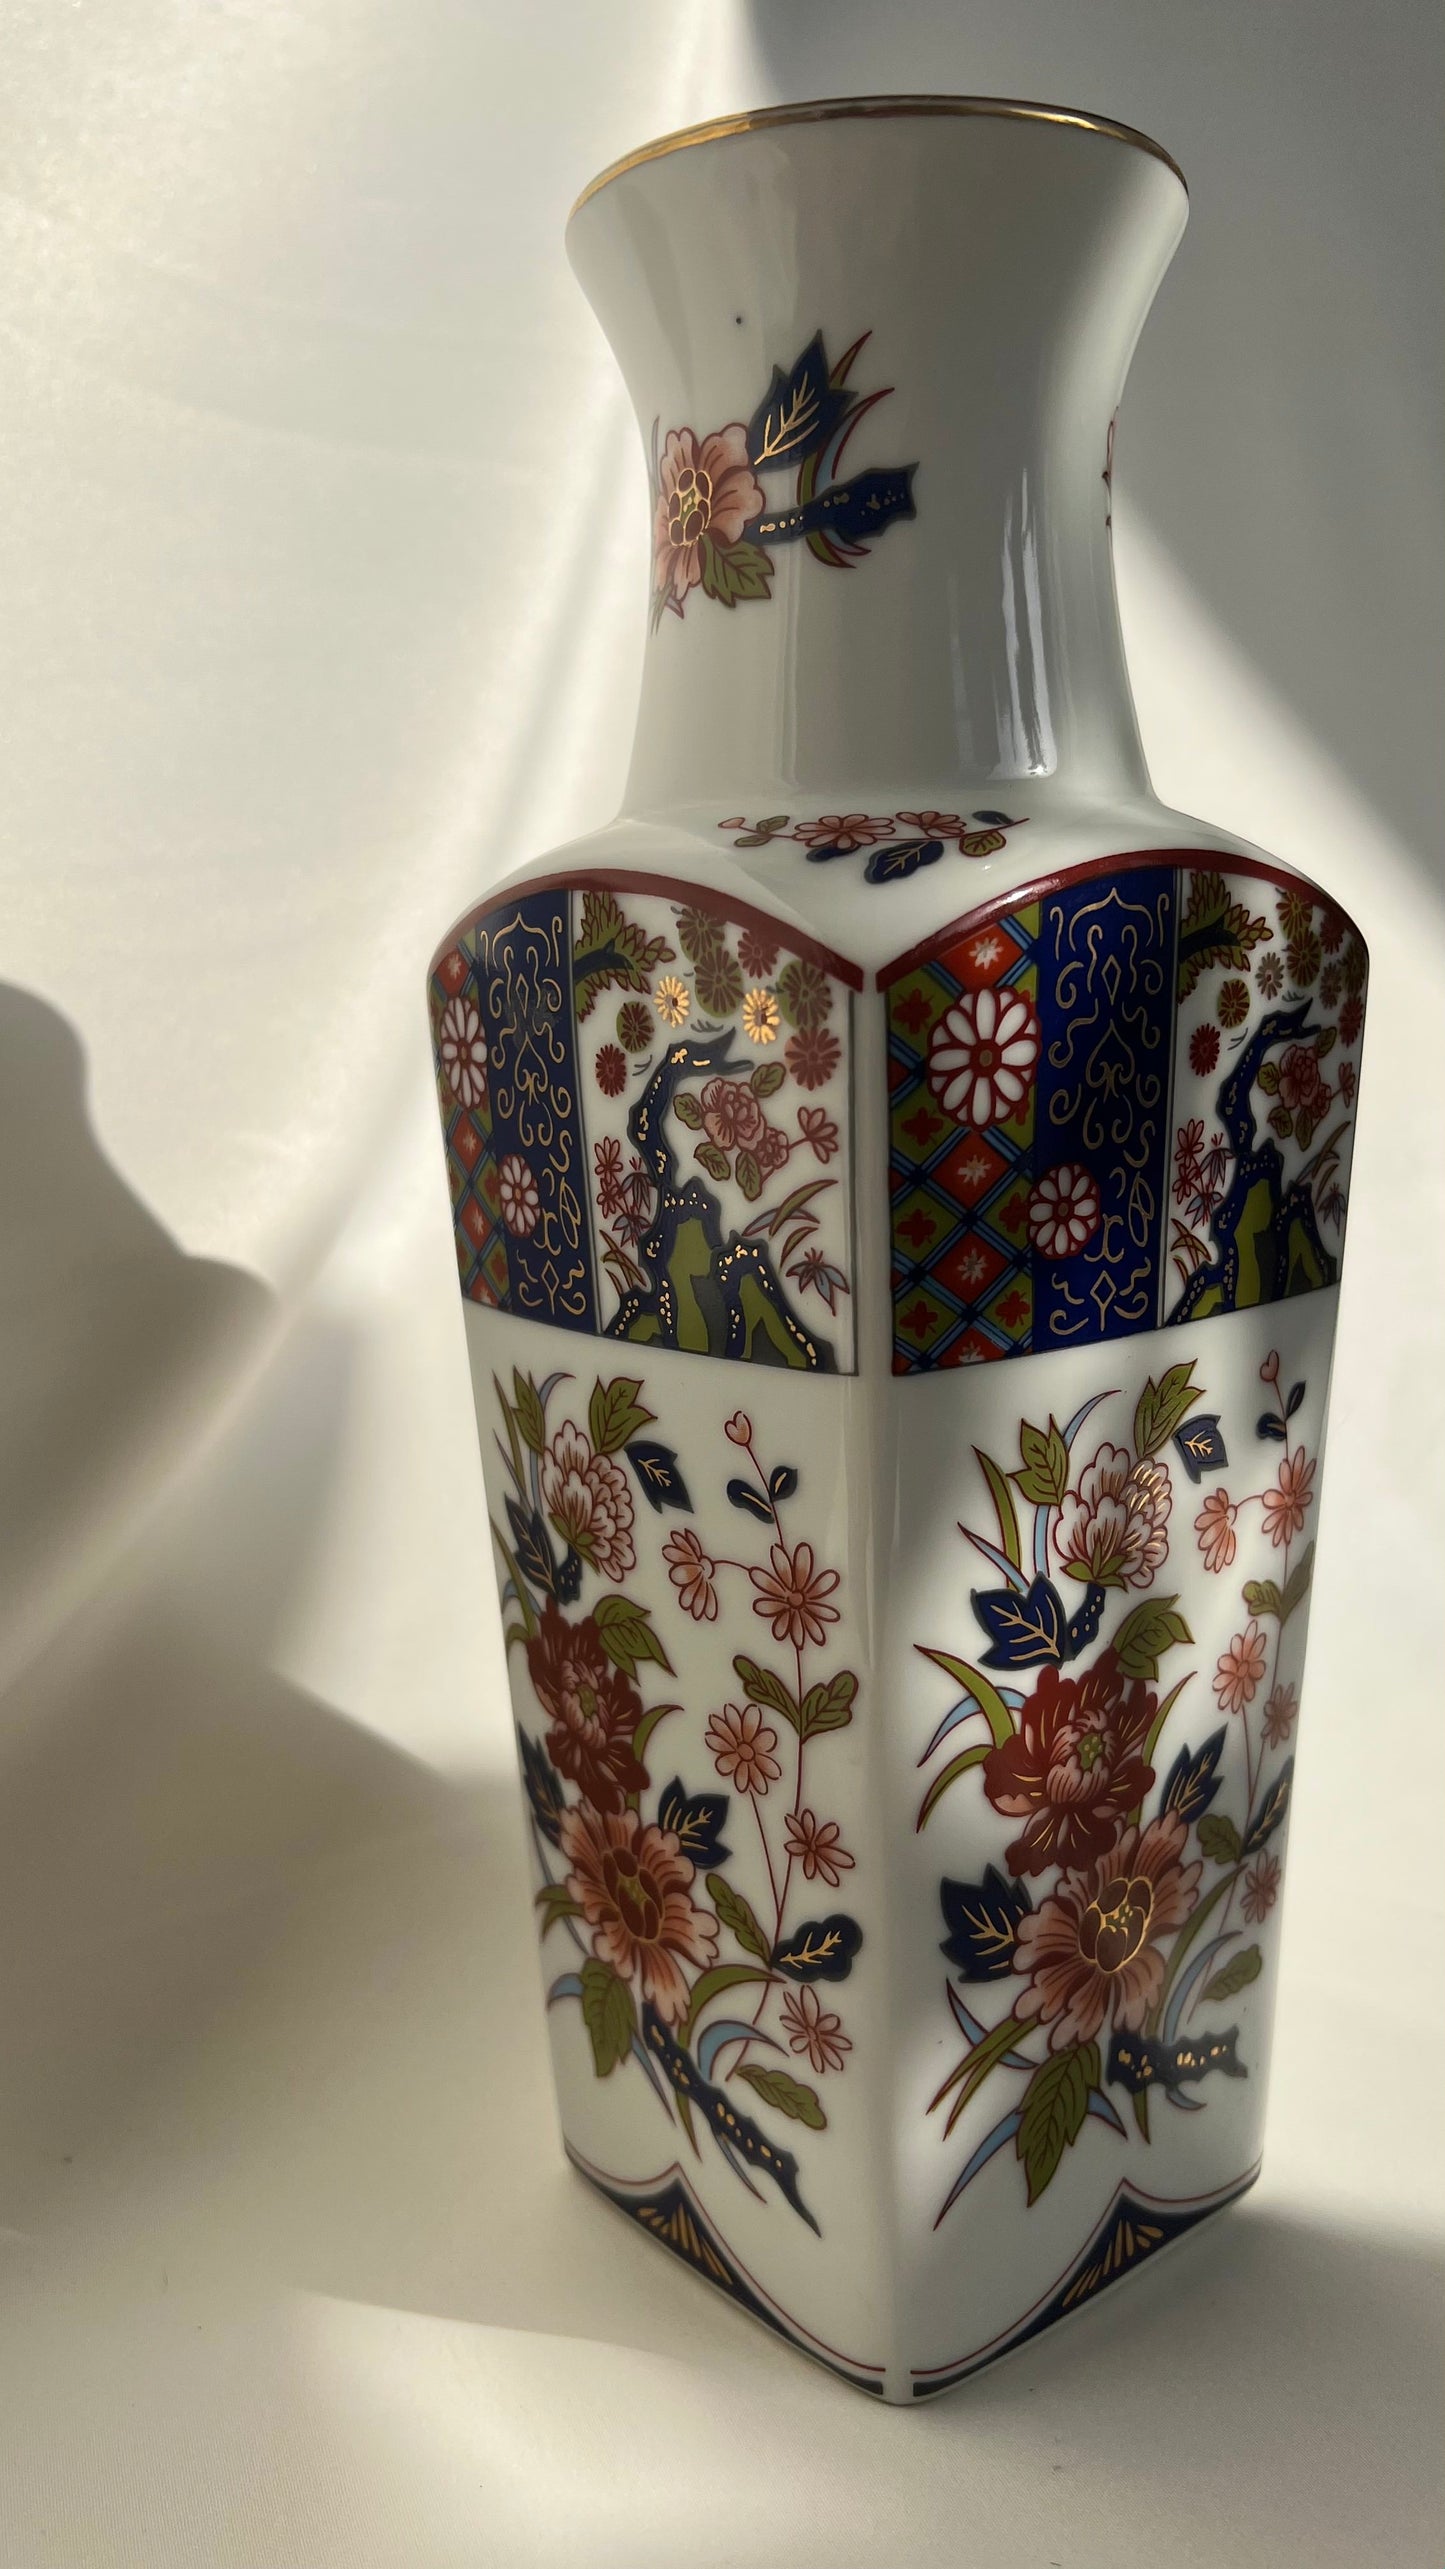 Imrai porcelain vase | אגרטל פורצלן אימרי